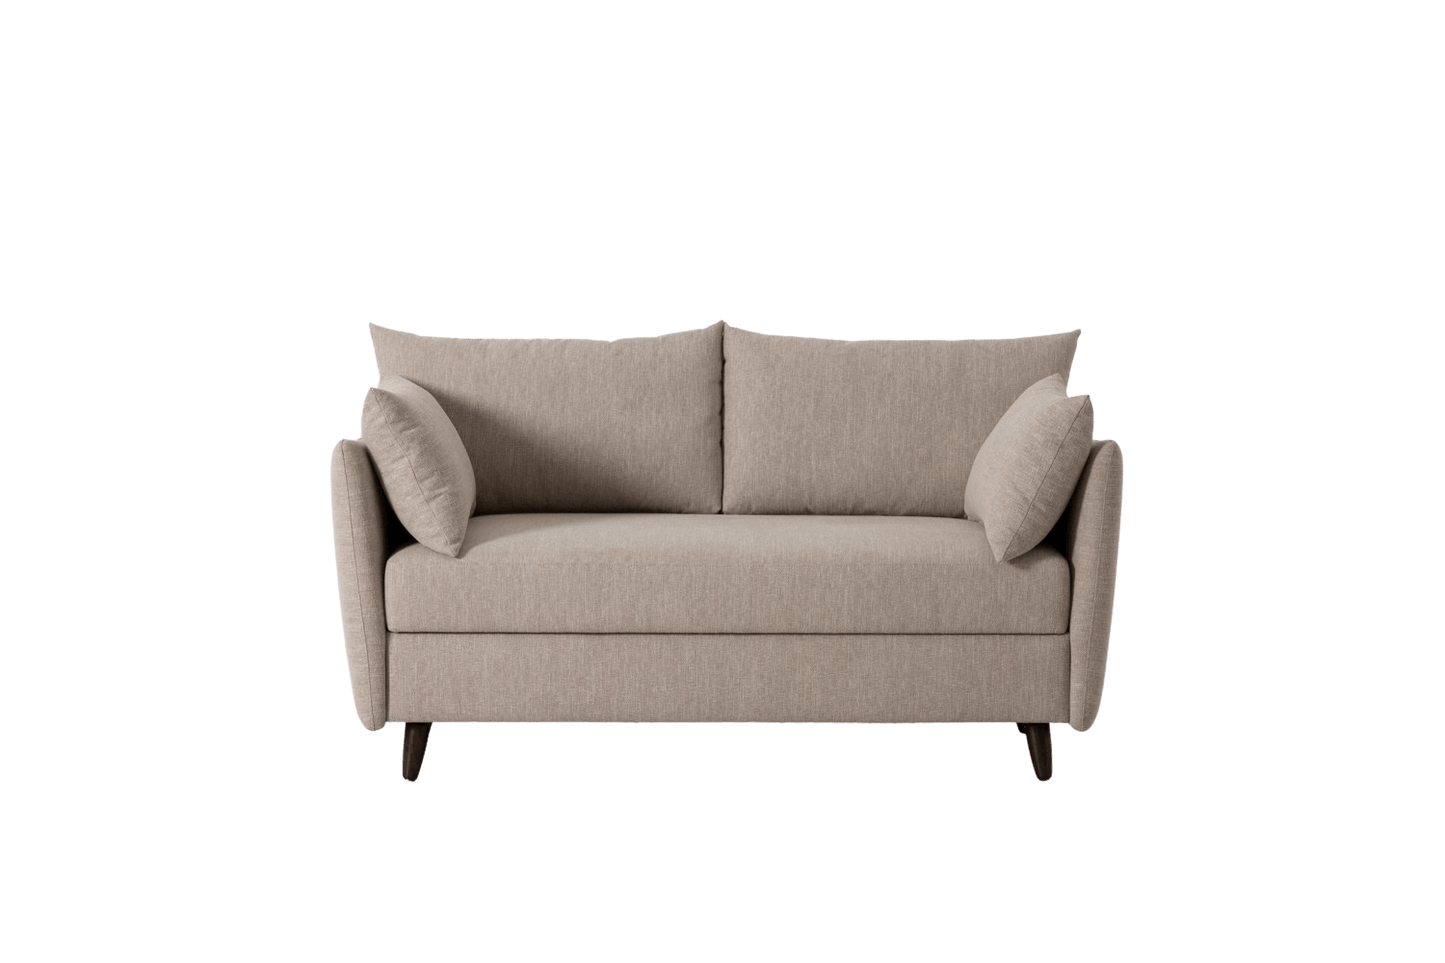 Model 08 Linen Sofa Bed - Double